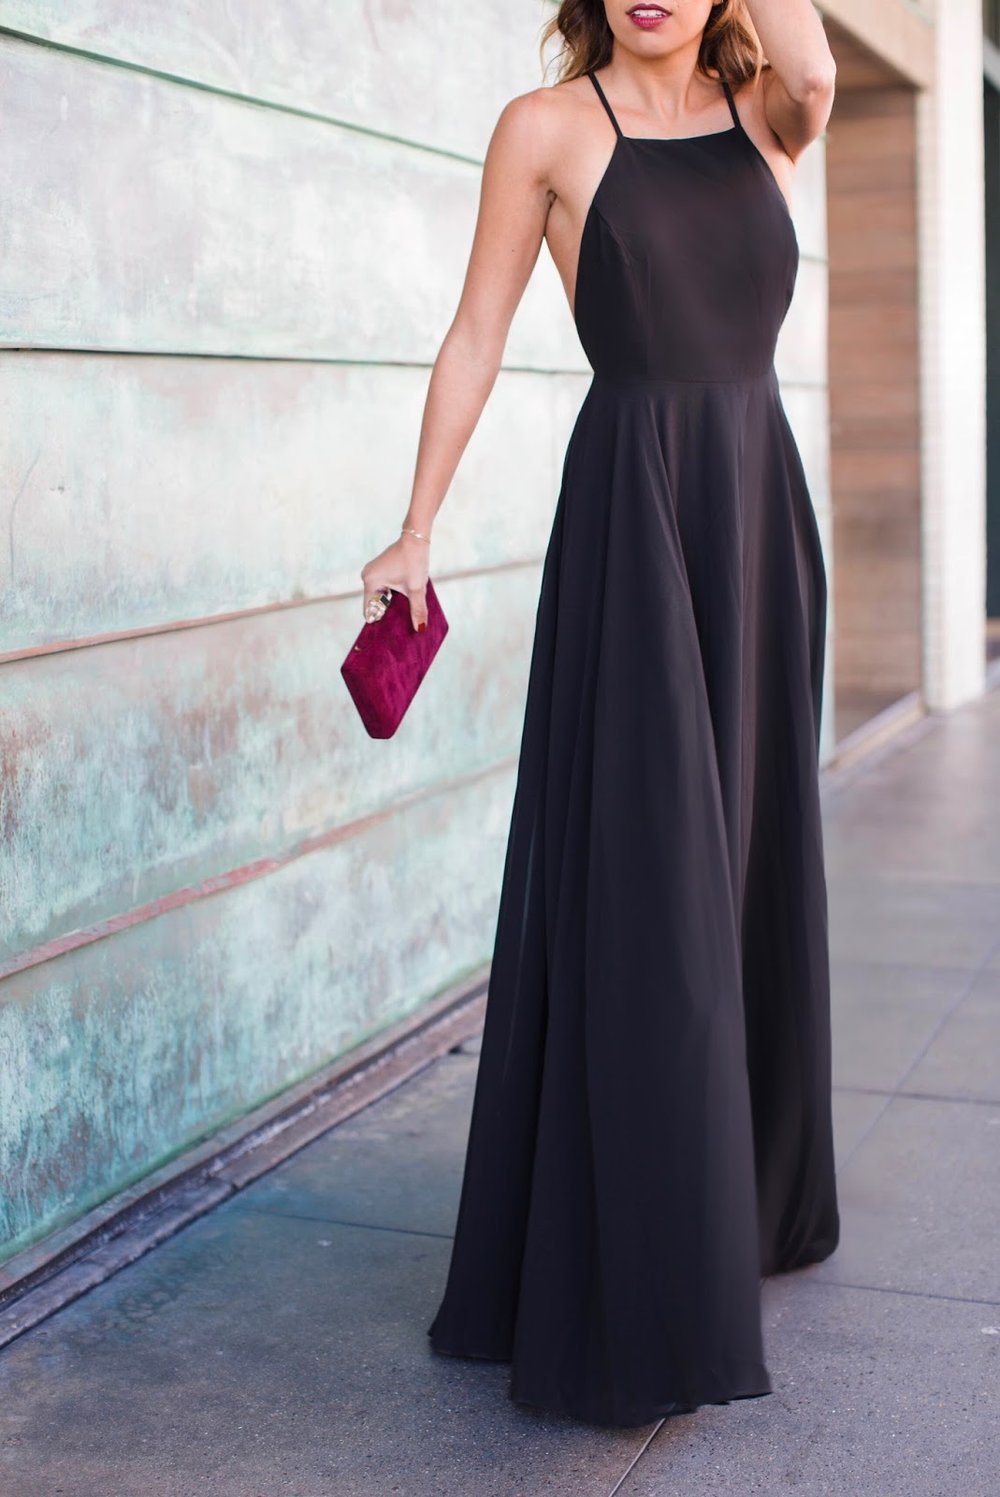 lulus black formal dress